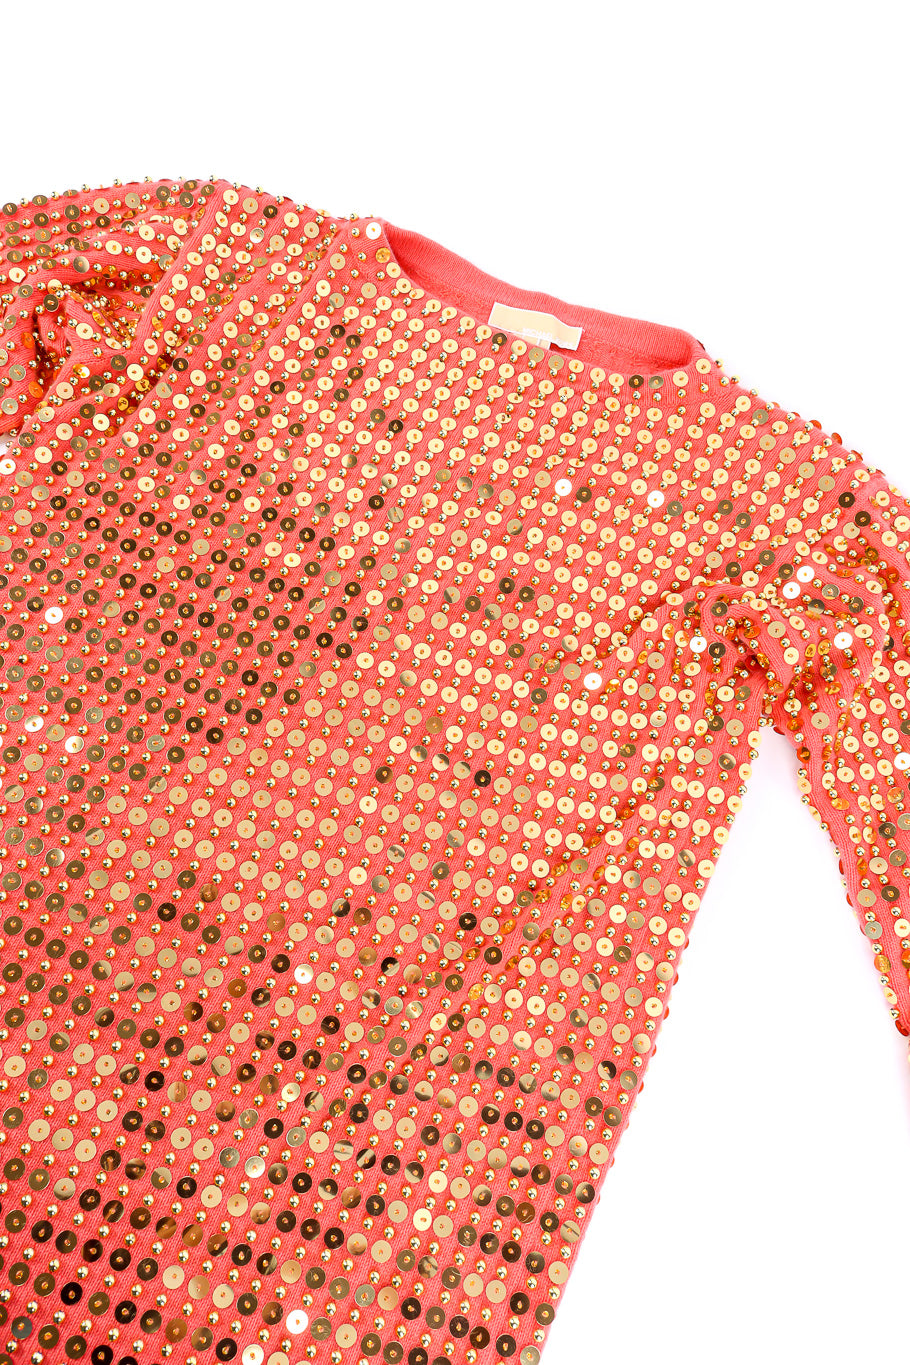 Cashmere sequin sweater dress by Michael Kors flat lay  @recessla